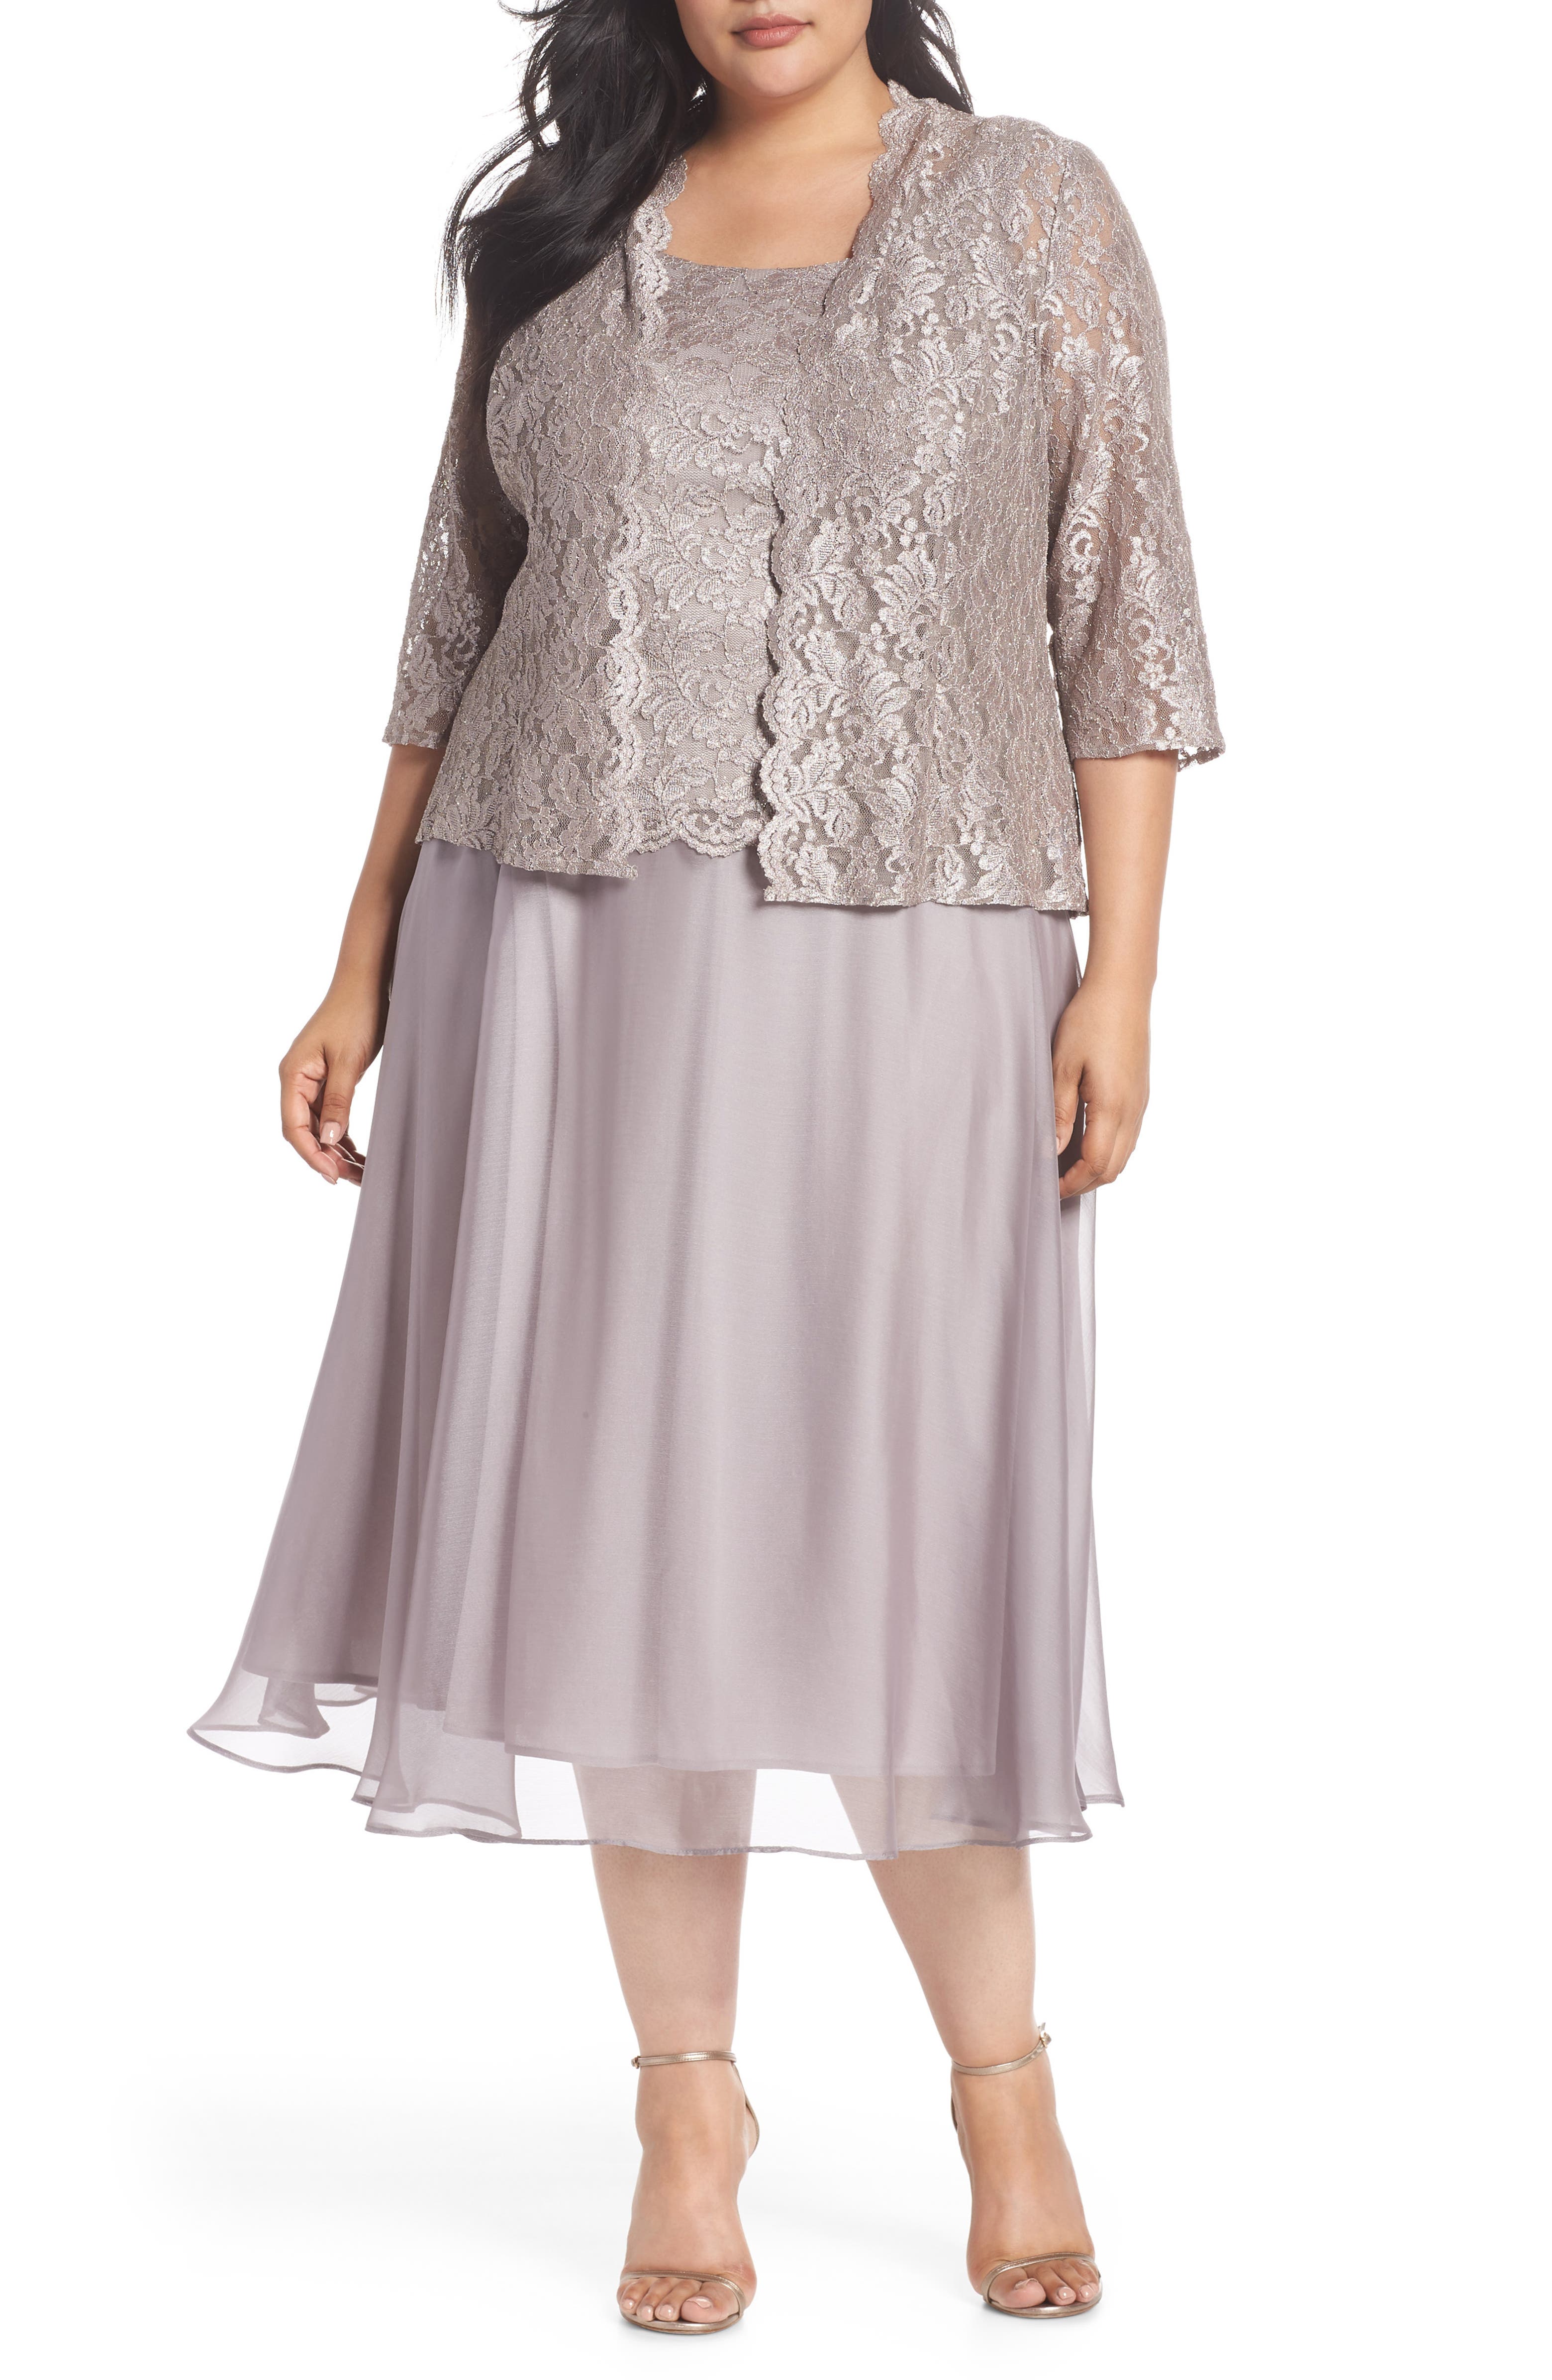 Alex Evenings Lace Bodice Tea Length Dress with Jacket (Plus Size ...